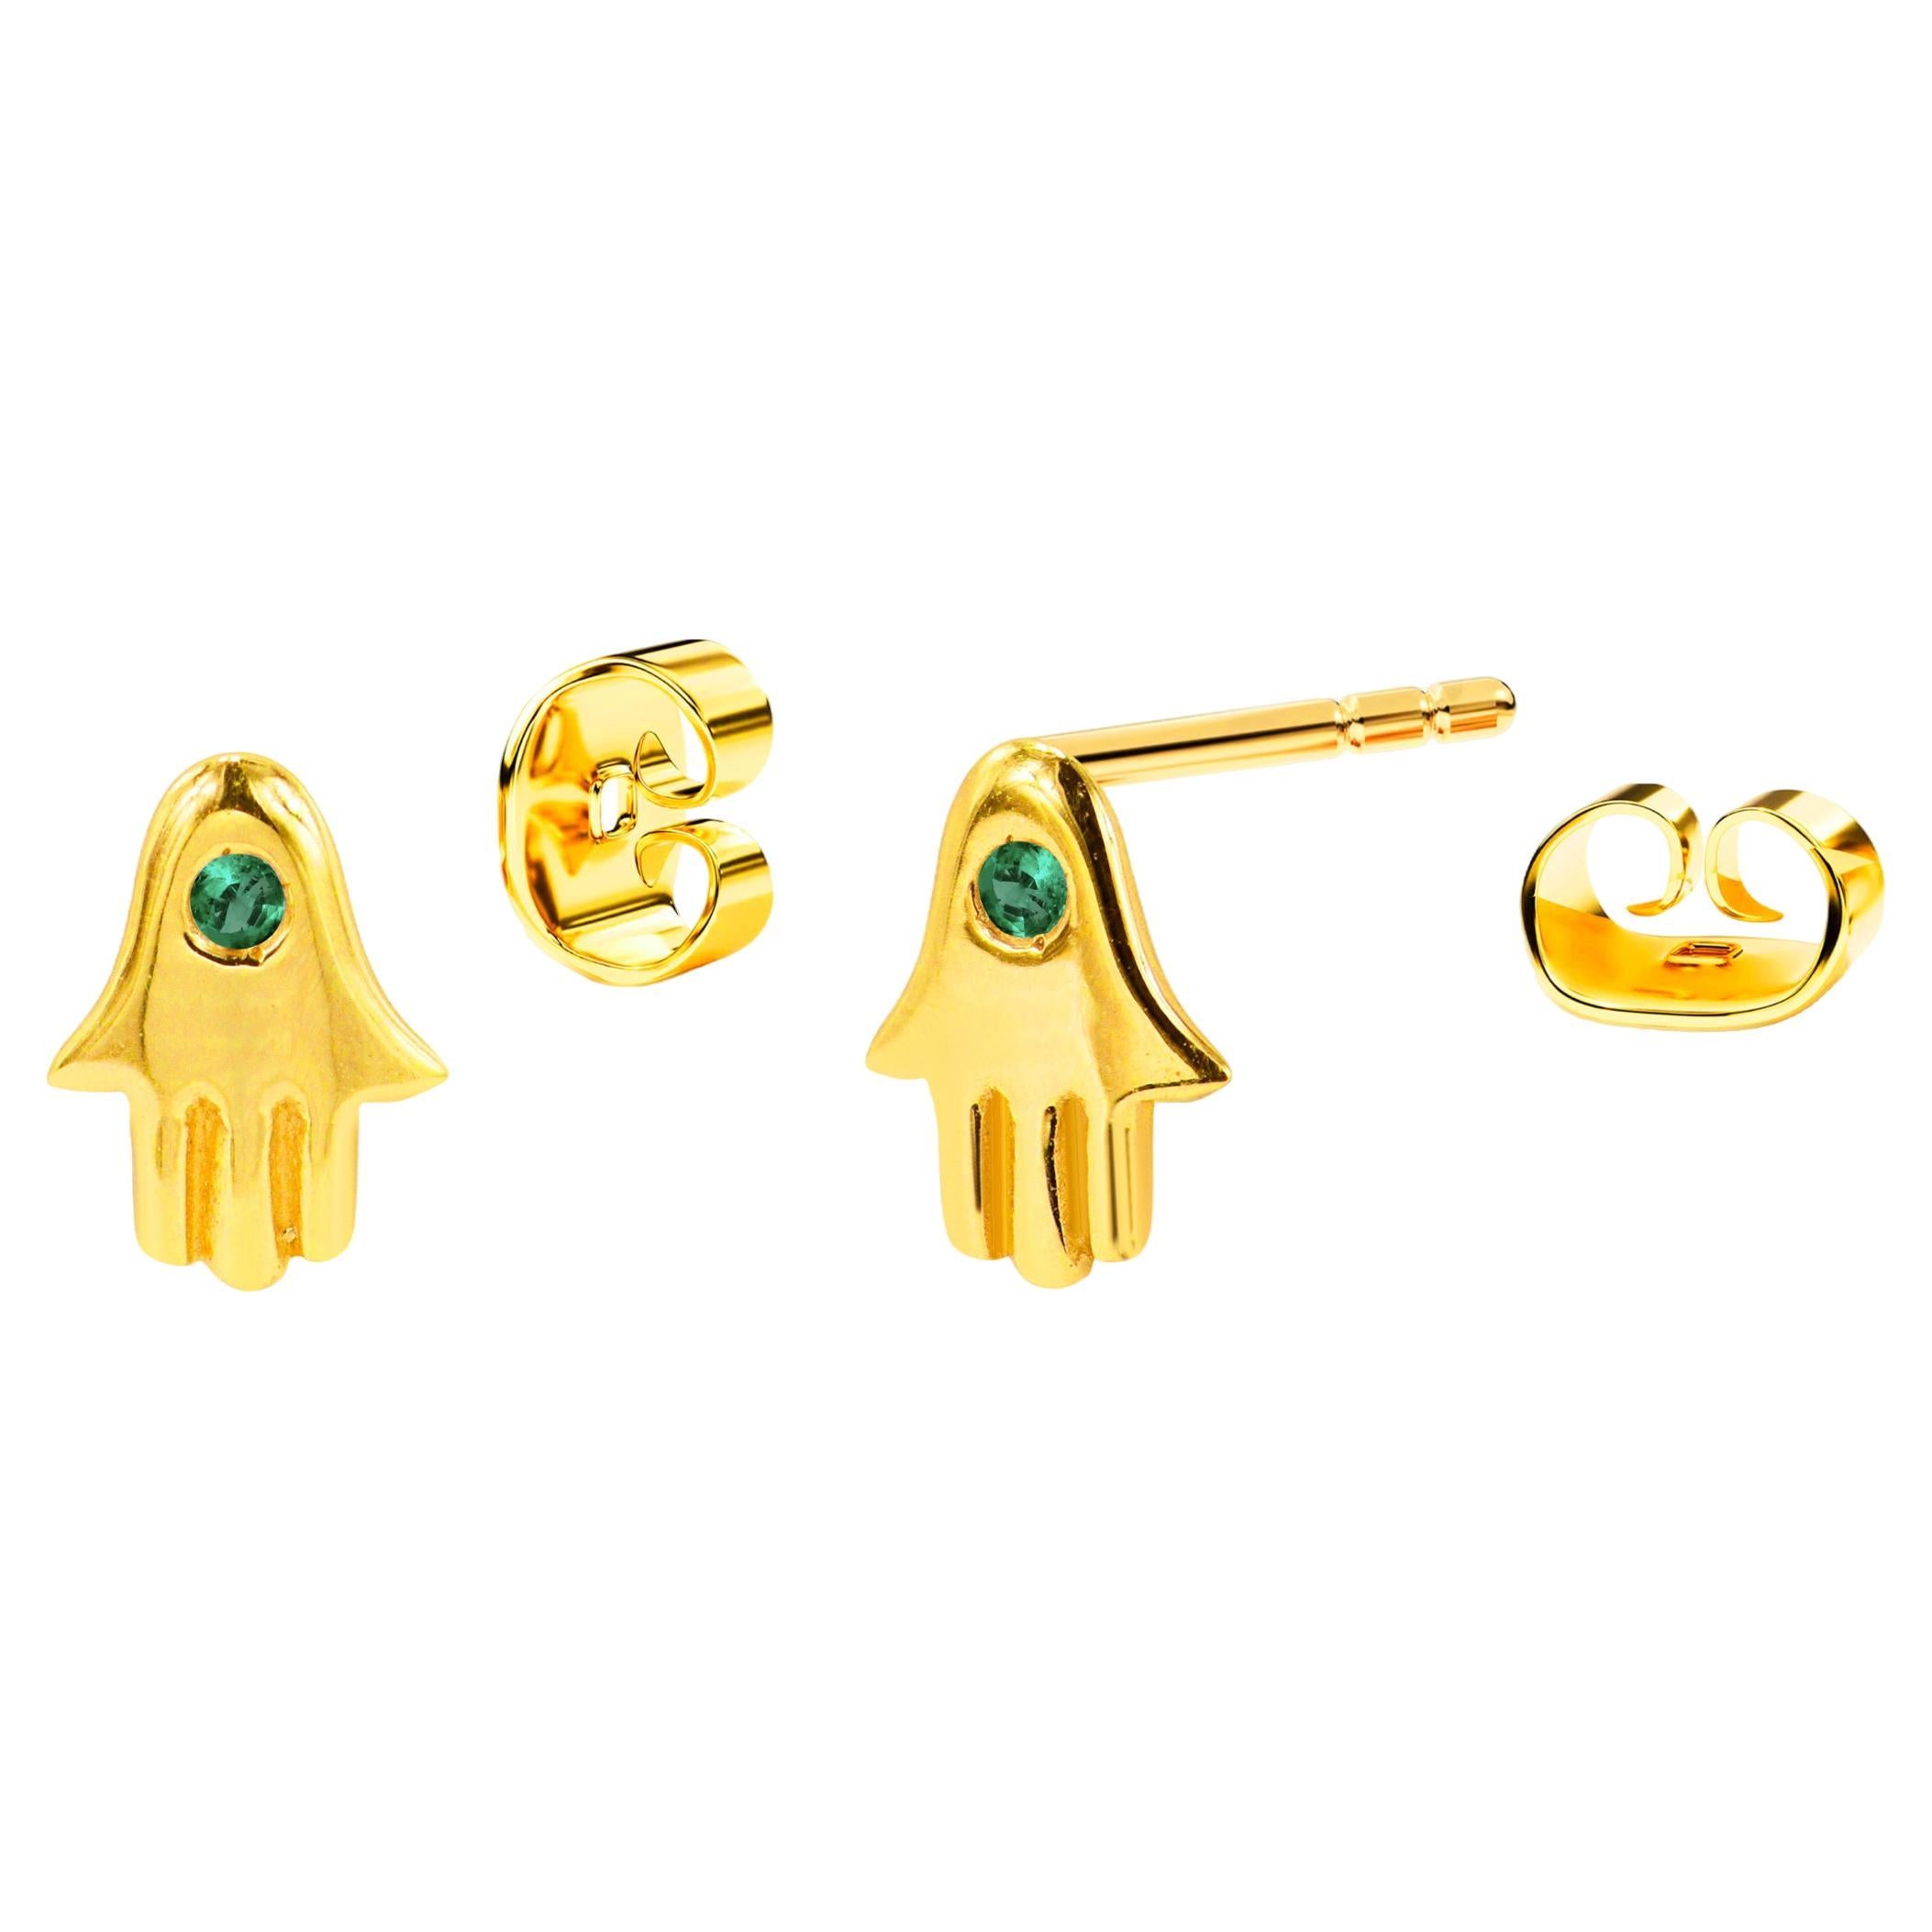 18k Solid Gold Tiny Hamsa Hand Earrings Genuine Emerald One Stone Earrings